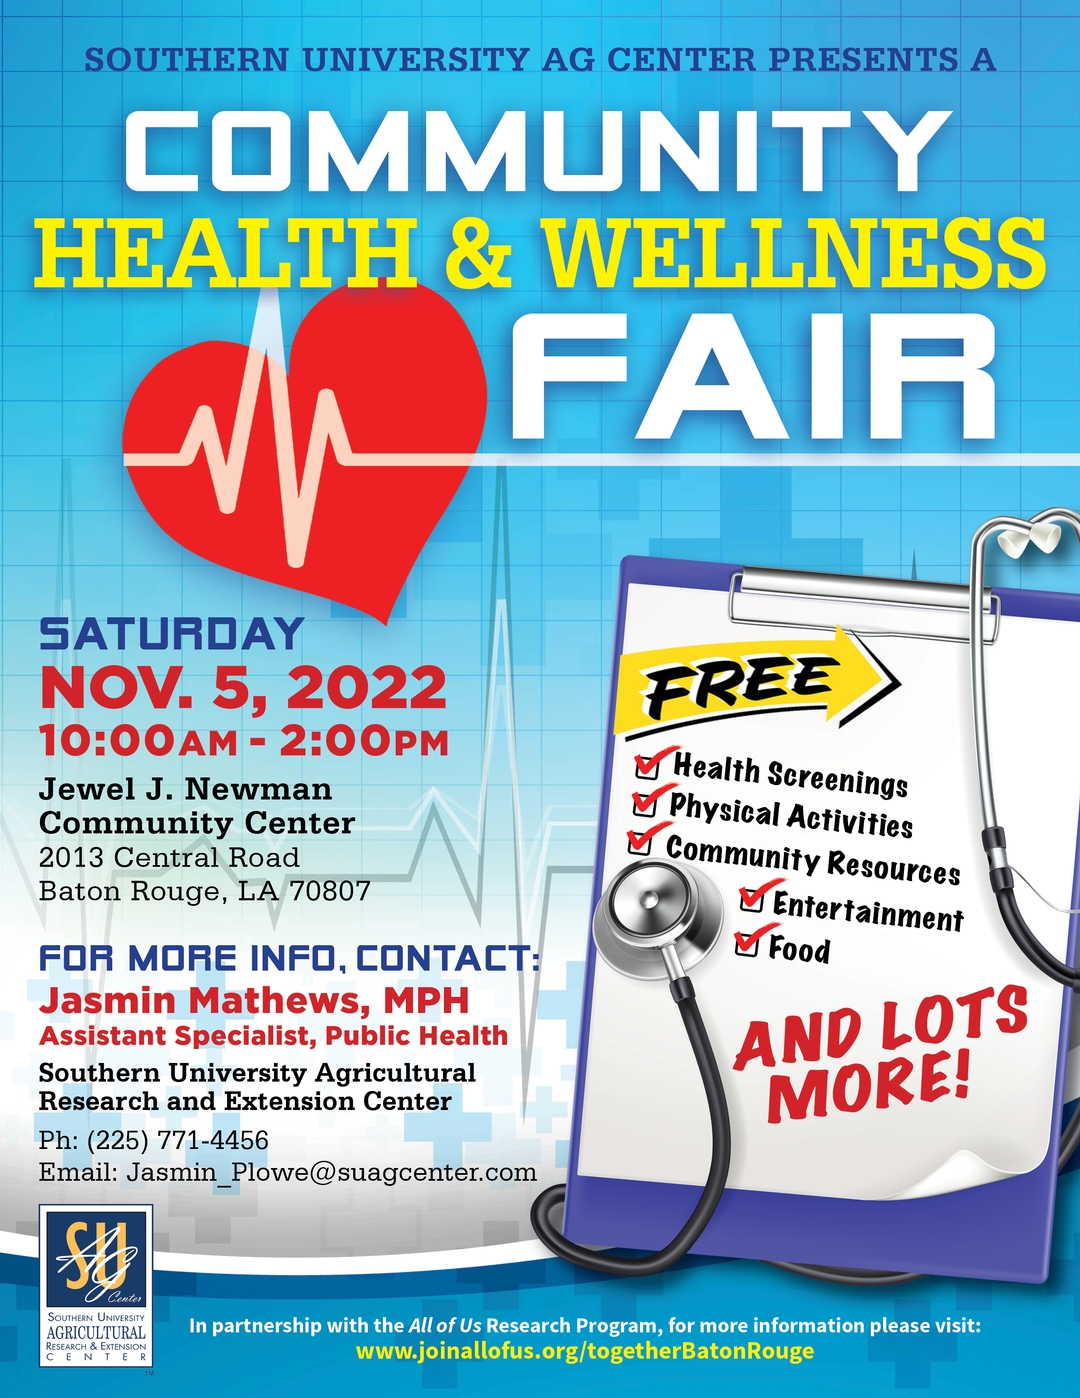 SU Ag Center's Community Health & Wellness Fair will be held Nov. 5, 2022 at the Jewel J. Newman Community Center.